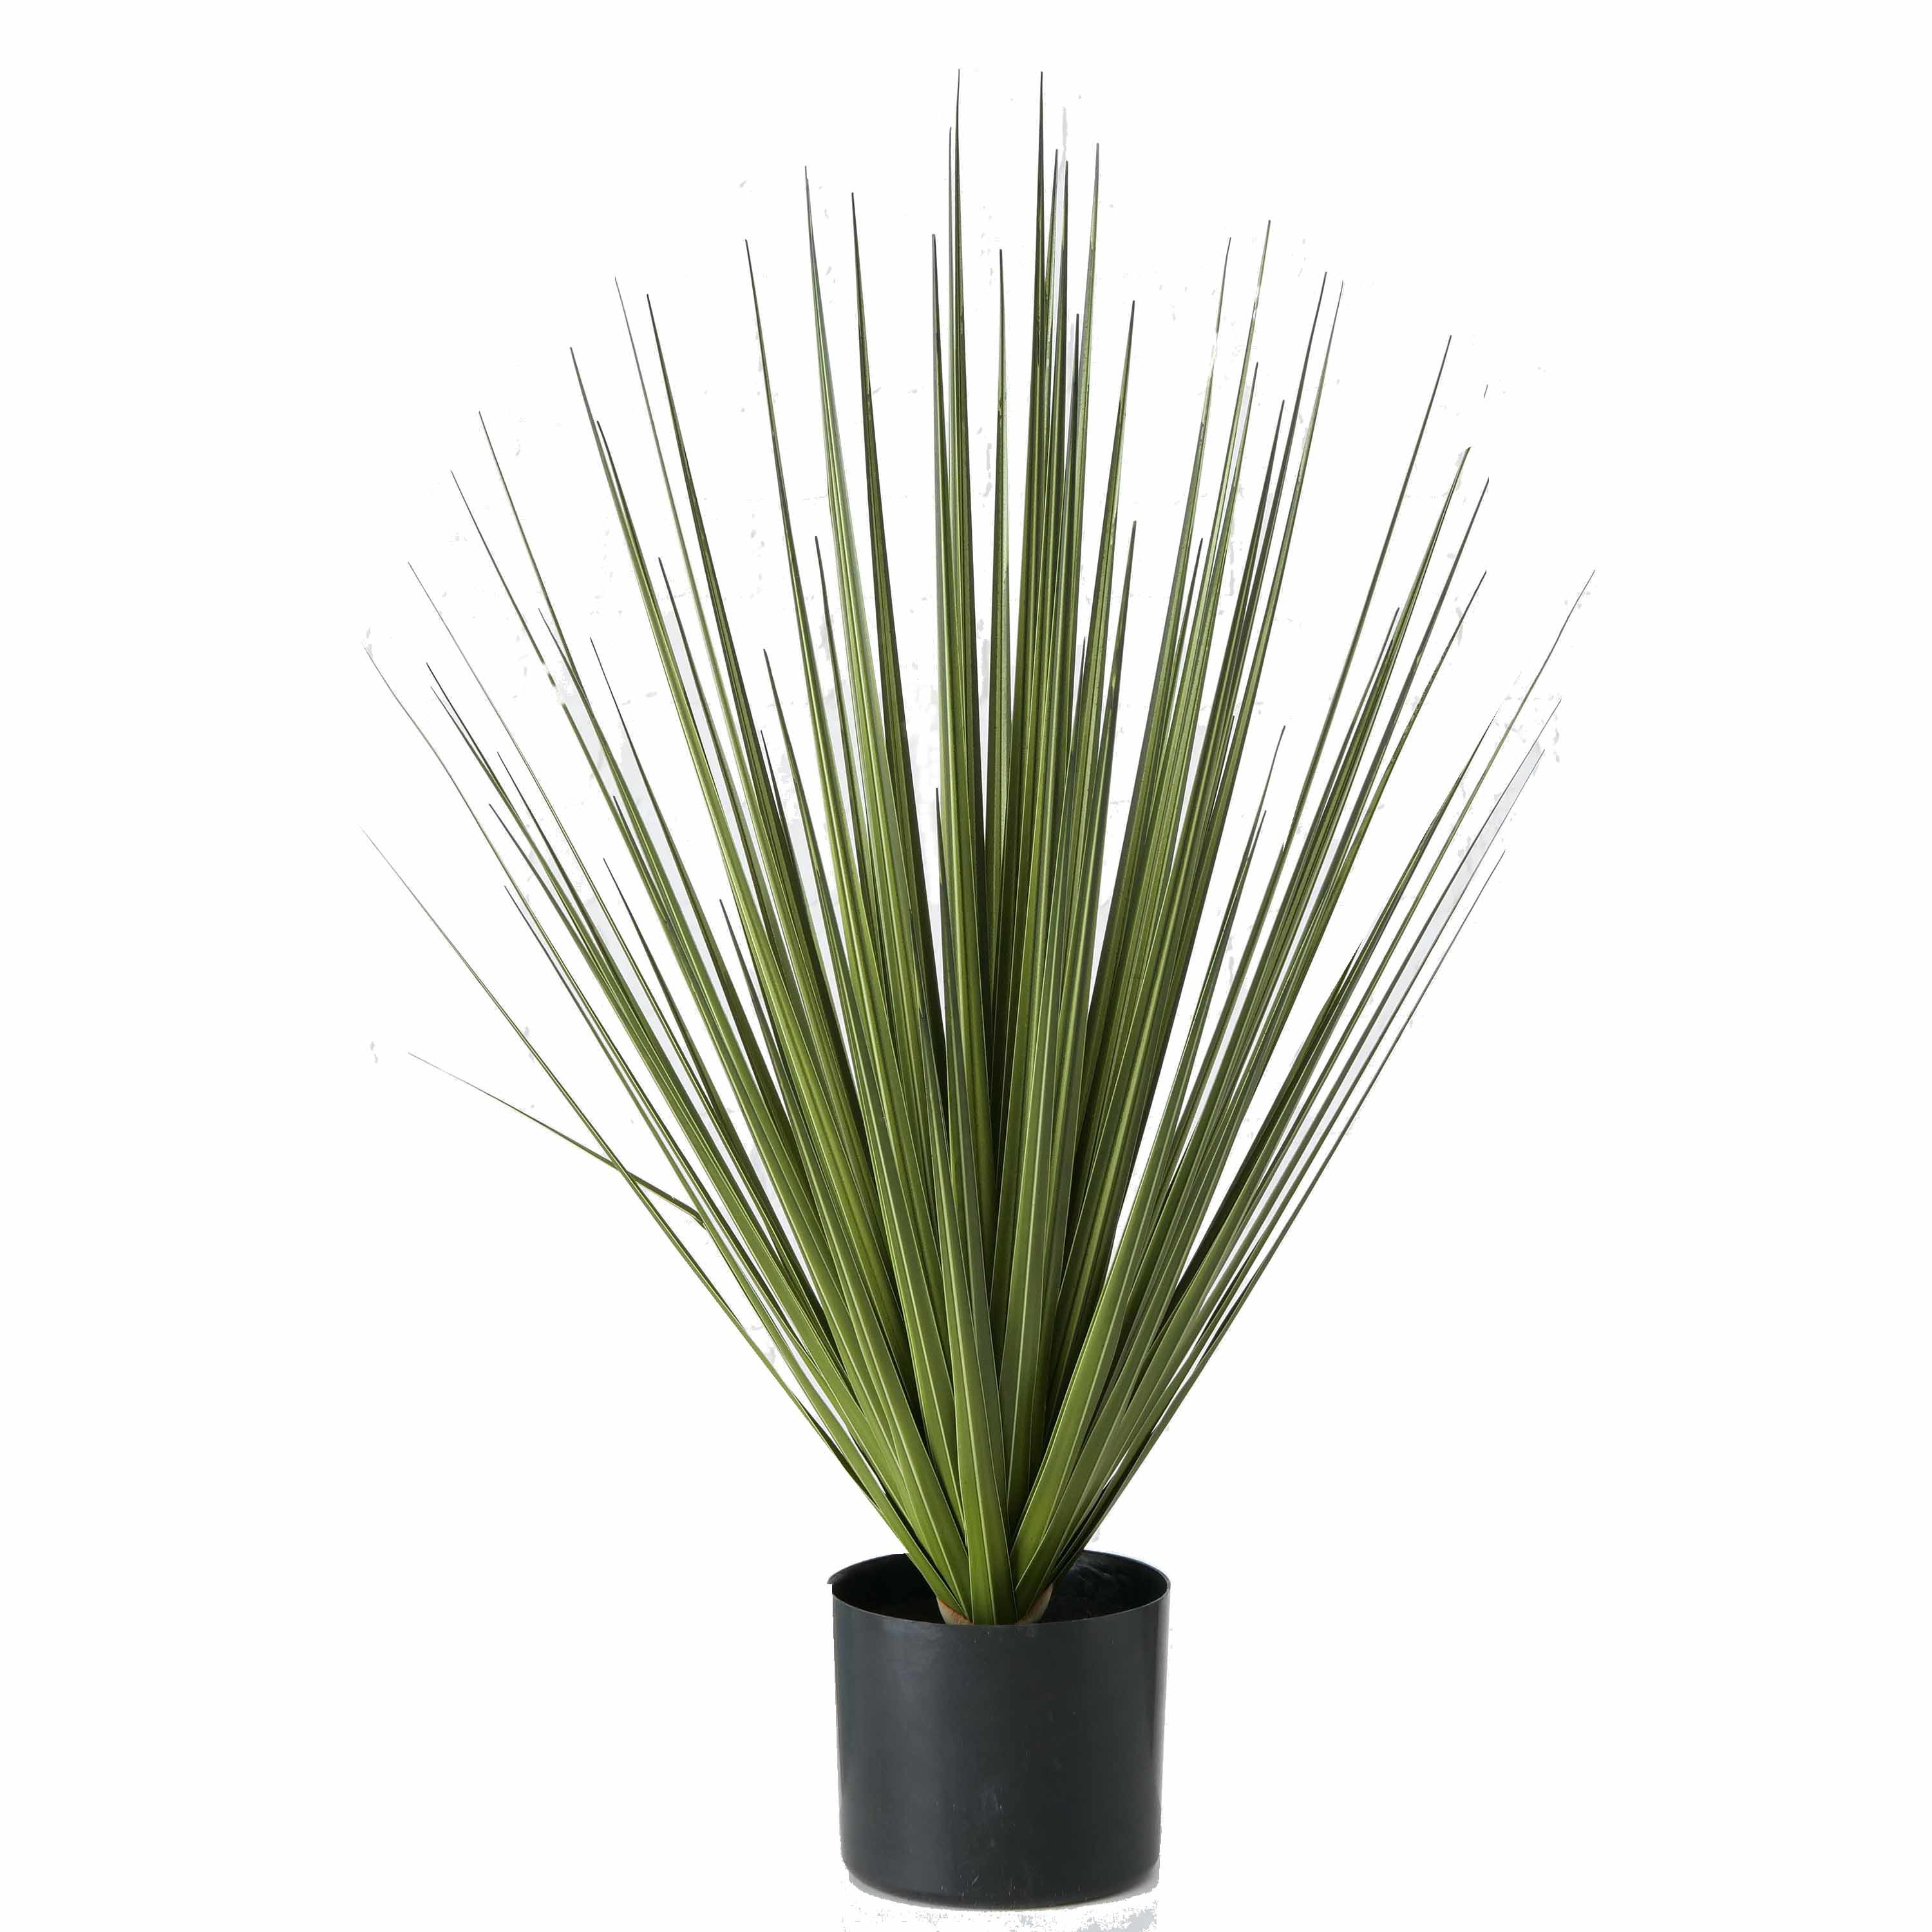 1x Groene grasplanten/kunstplanten Carex 78 cm in zwarte pot -